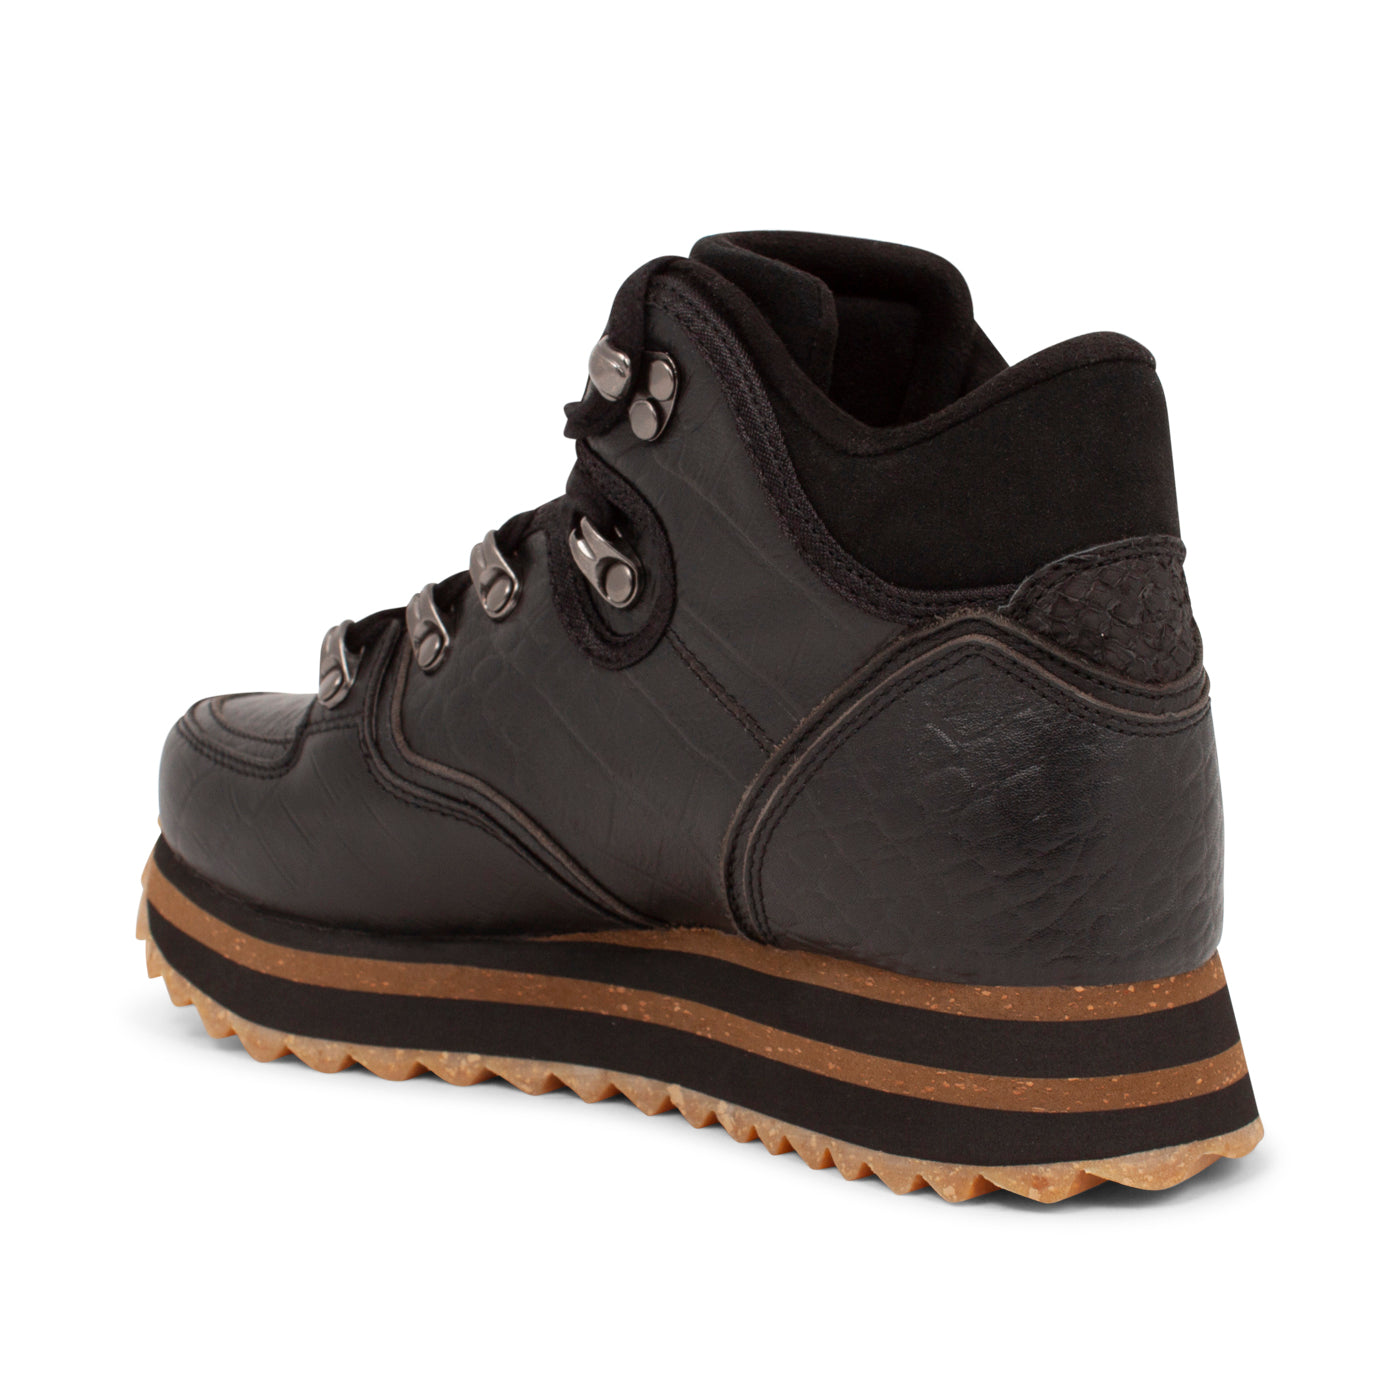 WODEN Mille Croco Shiny Plateau Boots 020 Black